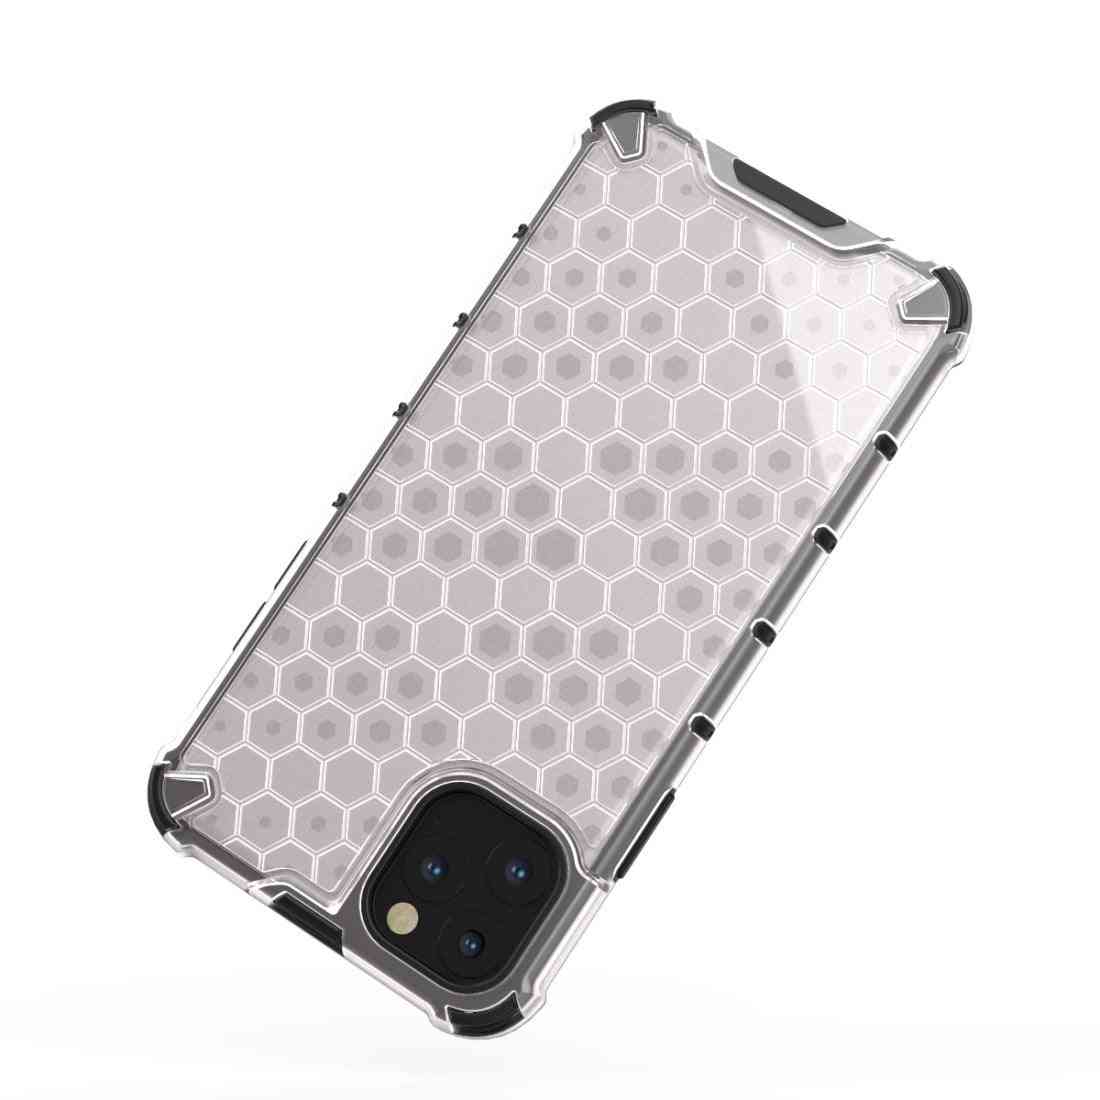 Amzer Honeycomb Slimgrip Hybrid Bumper Case For Iphone 11 Pro Max